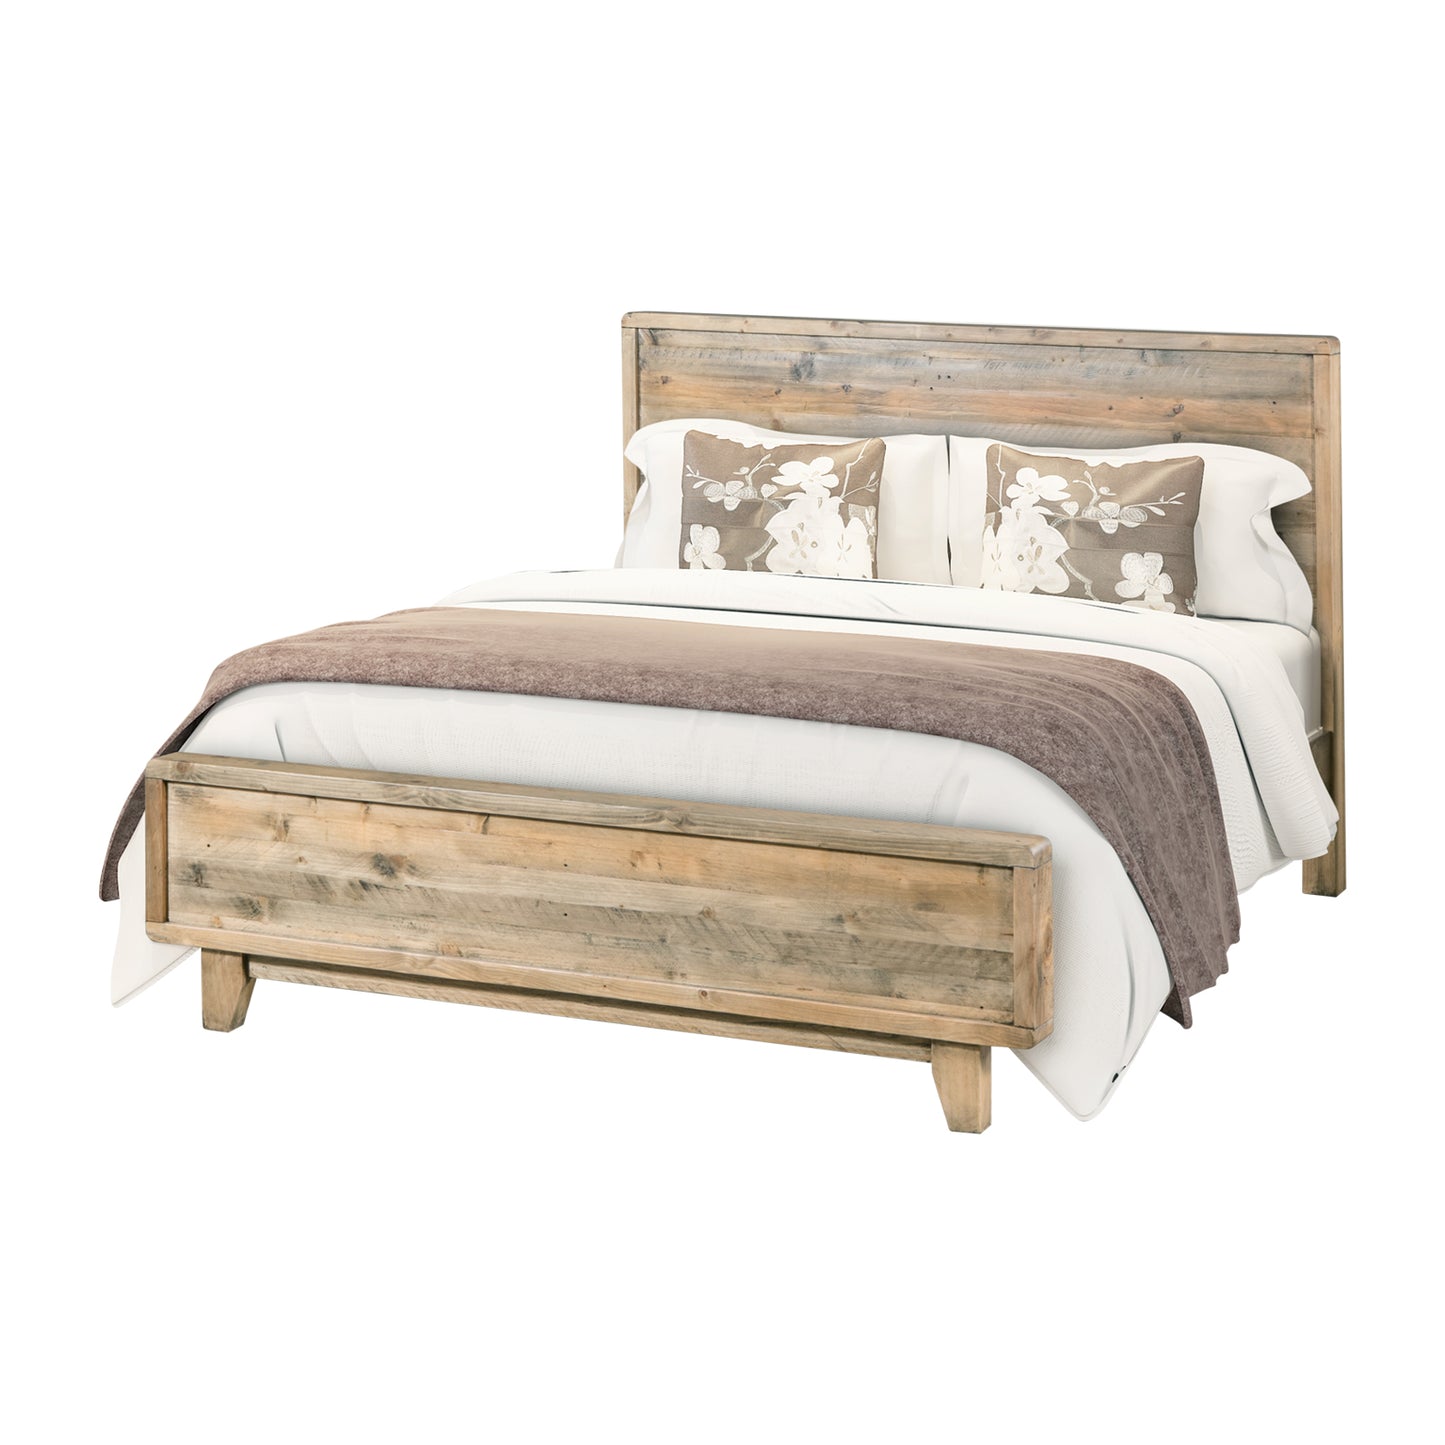 Nalini Wooden Bed Frame in Solid Wood Antique Design - Light Brown Queen